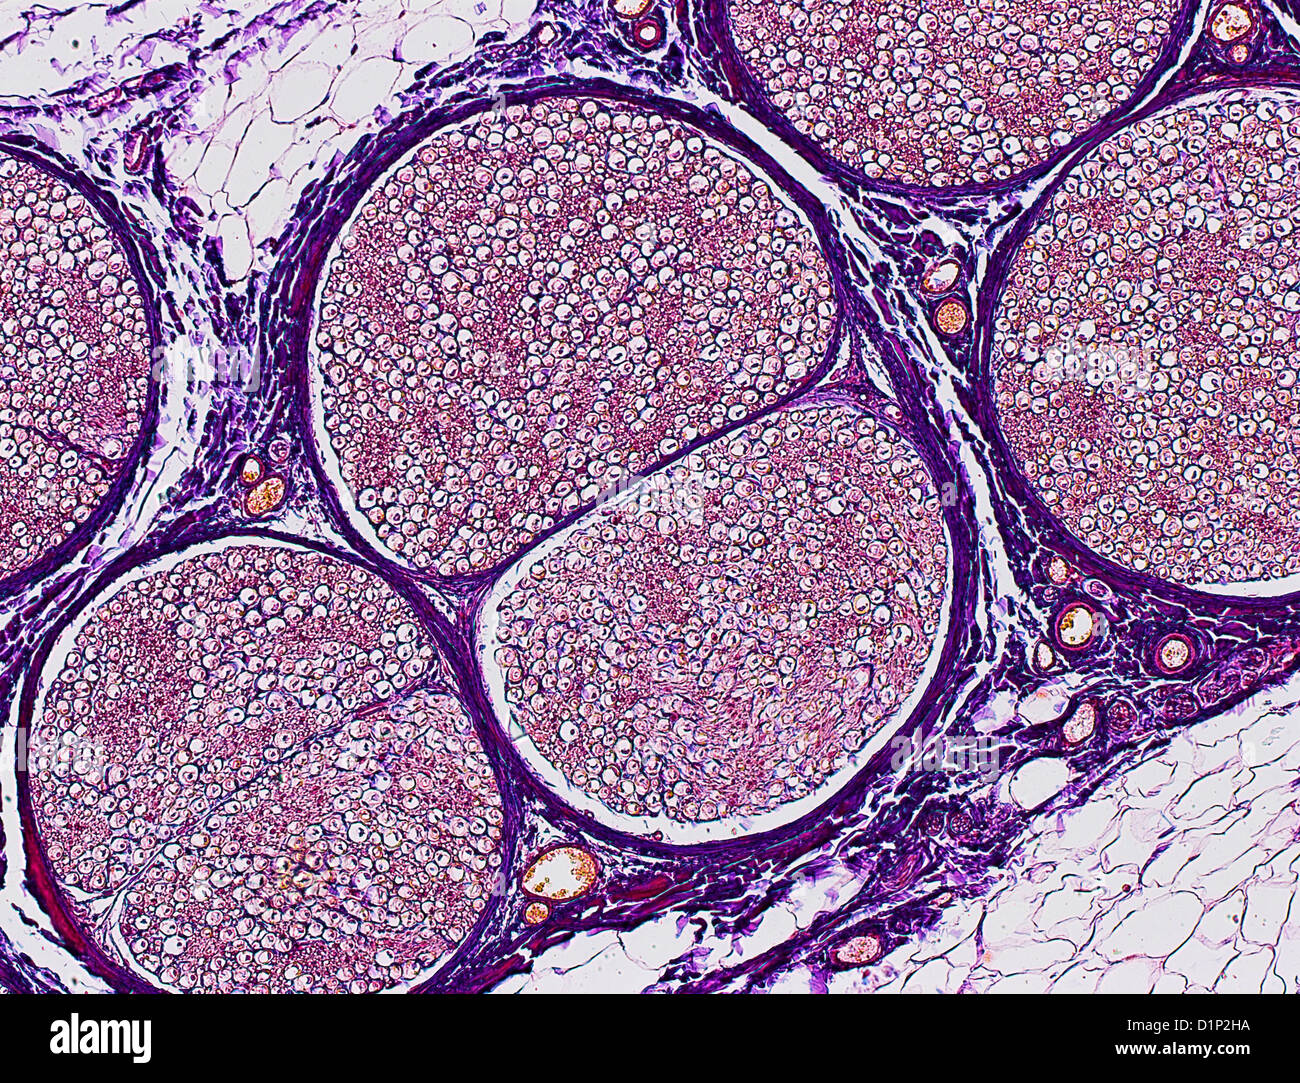 Nerve fibres, light micrograph Stock Photo